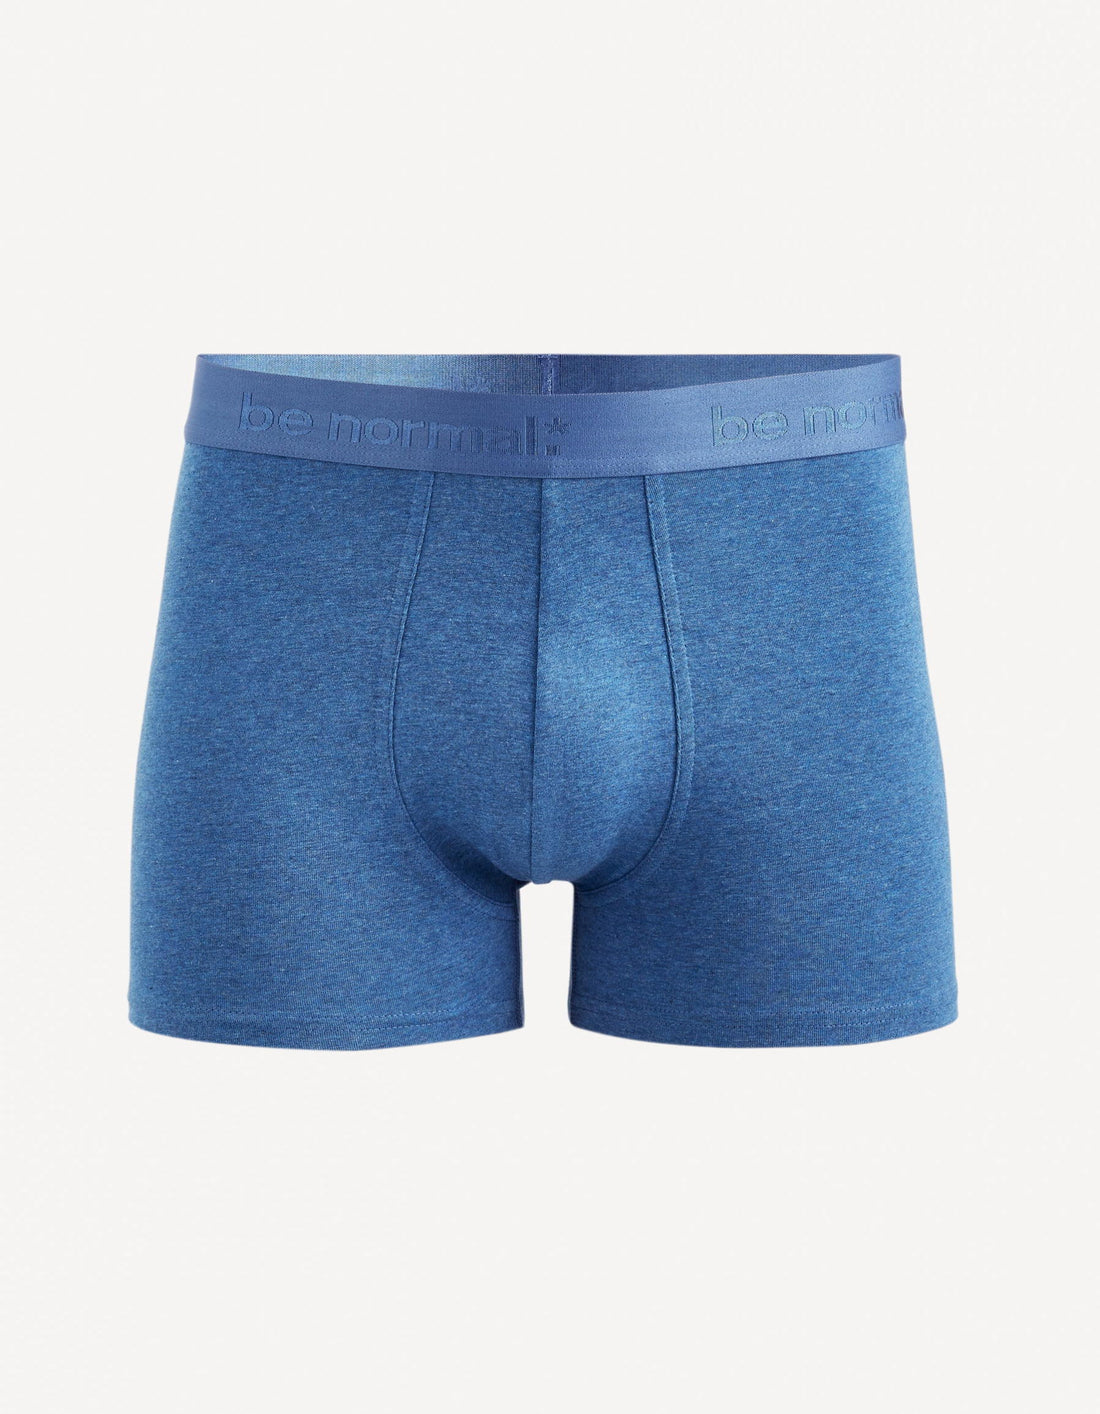 Plain Stretch Cotton Boxer Shorts_BINORMAL_BLUE AZUR MEL_01